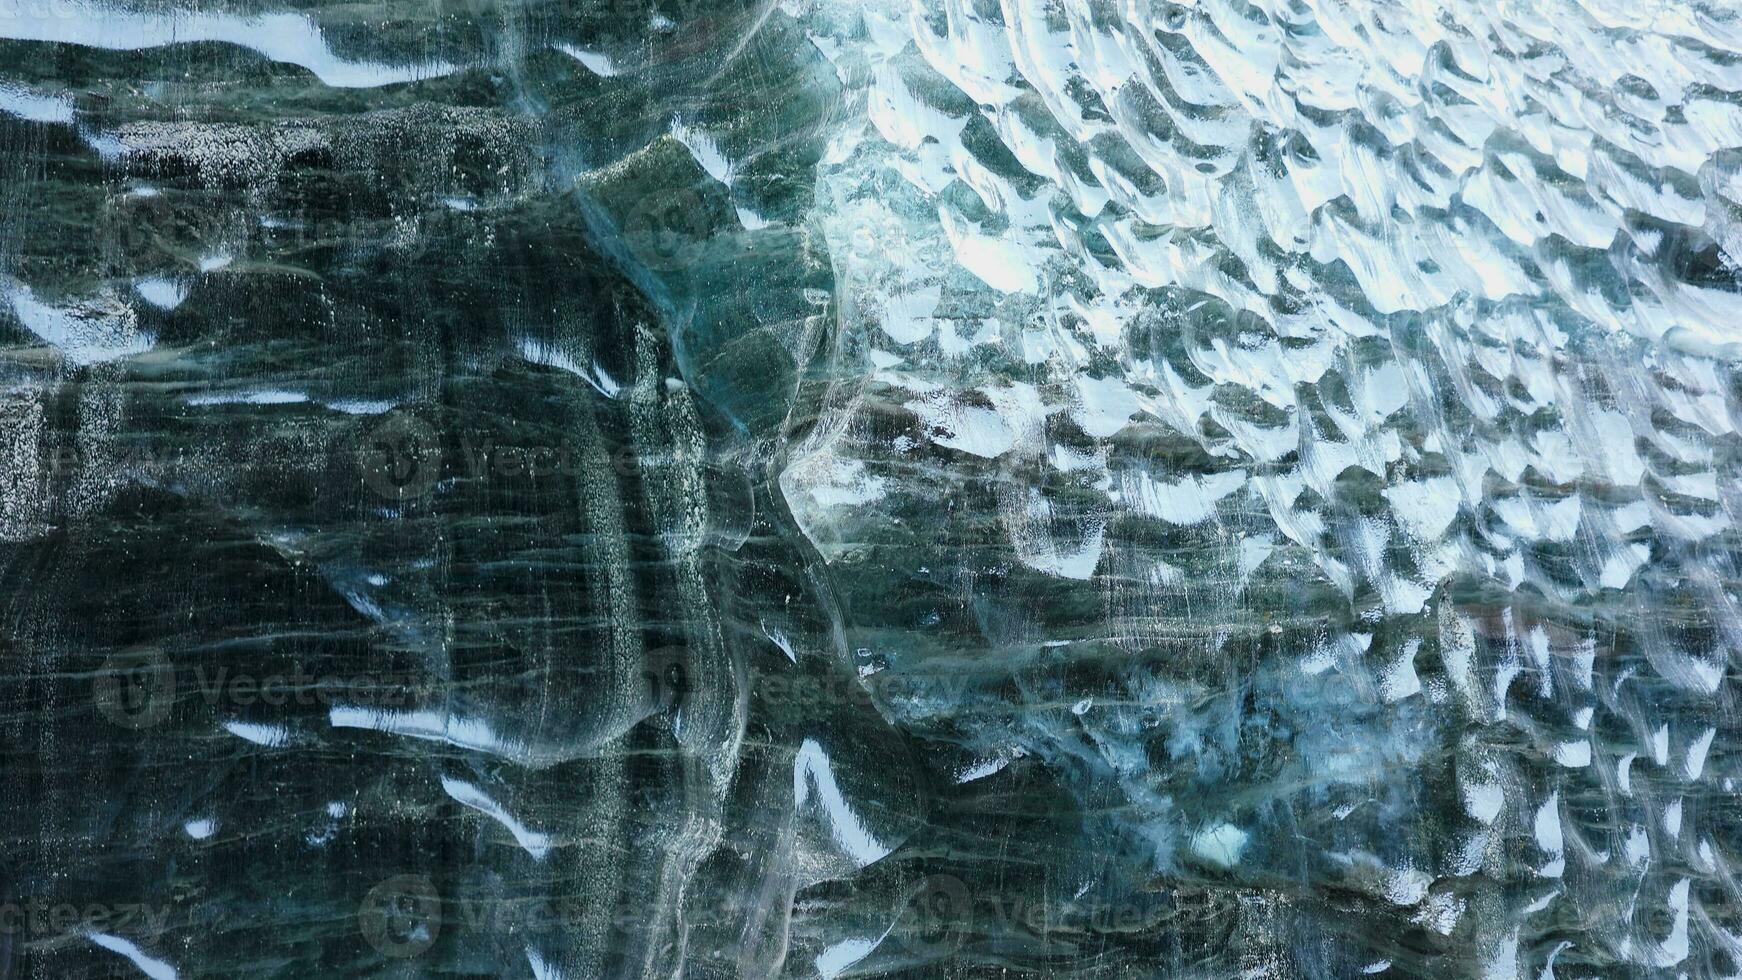 azul gelo massa dentro vatnajokull fenda, majestoso transparente gelo geleira dentro Islândia. dentro gelo cavernas com rachado gelo blocos coberto dentro geada rochas, nórdico paisagens. portátil tomada. foto